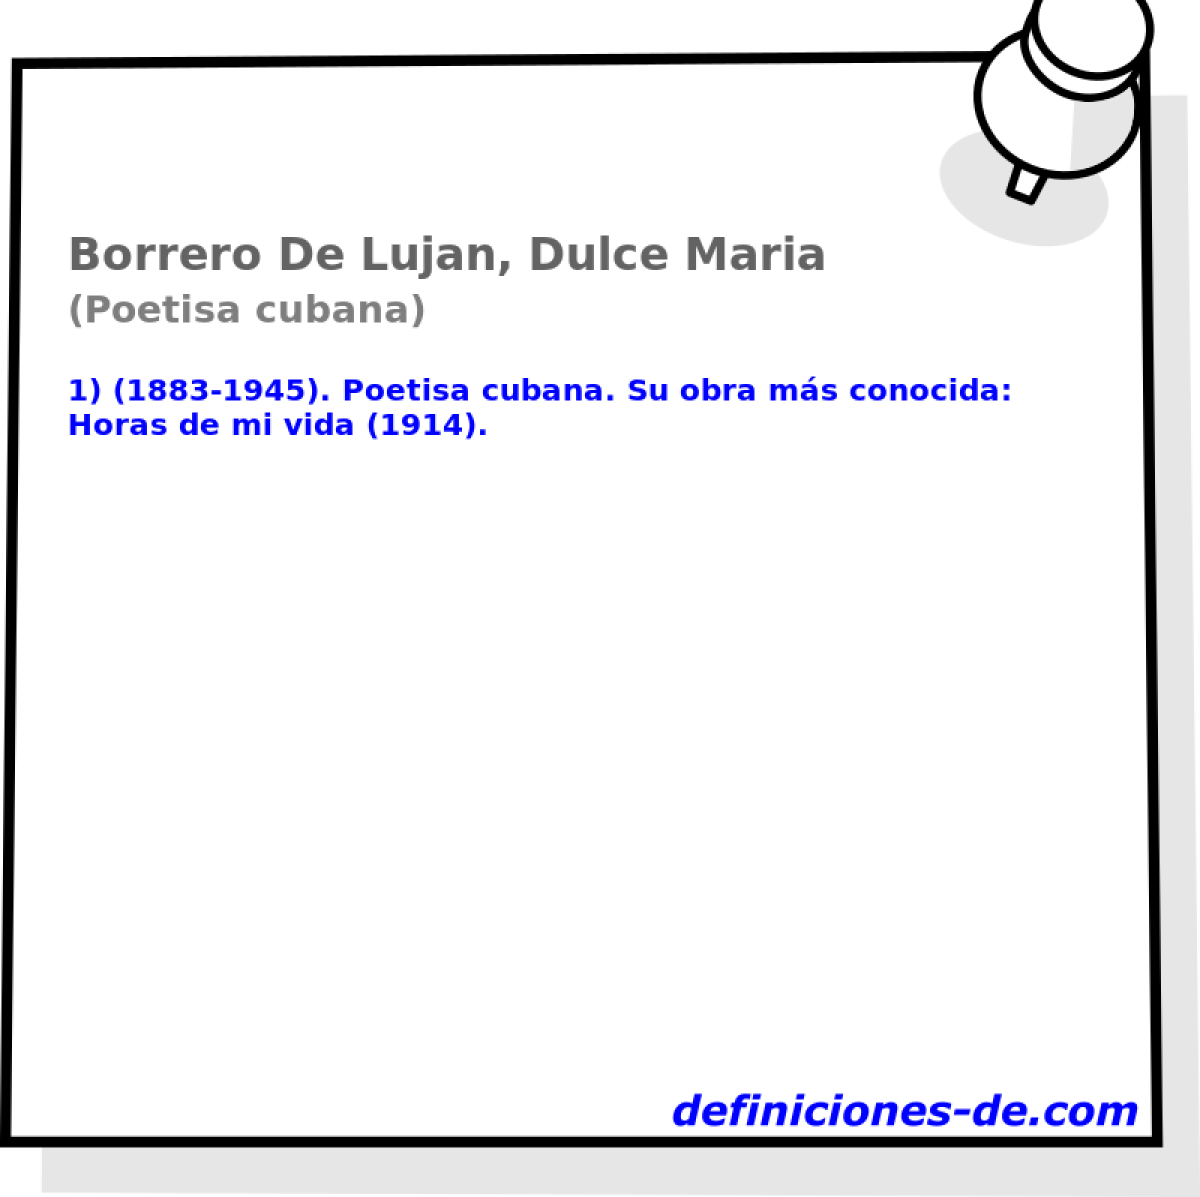 Borrero De Lujan, Dulce Maria (Poetisa cubana)